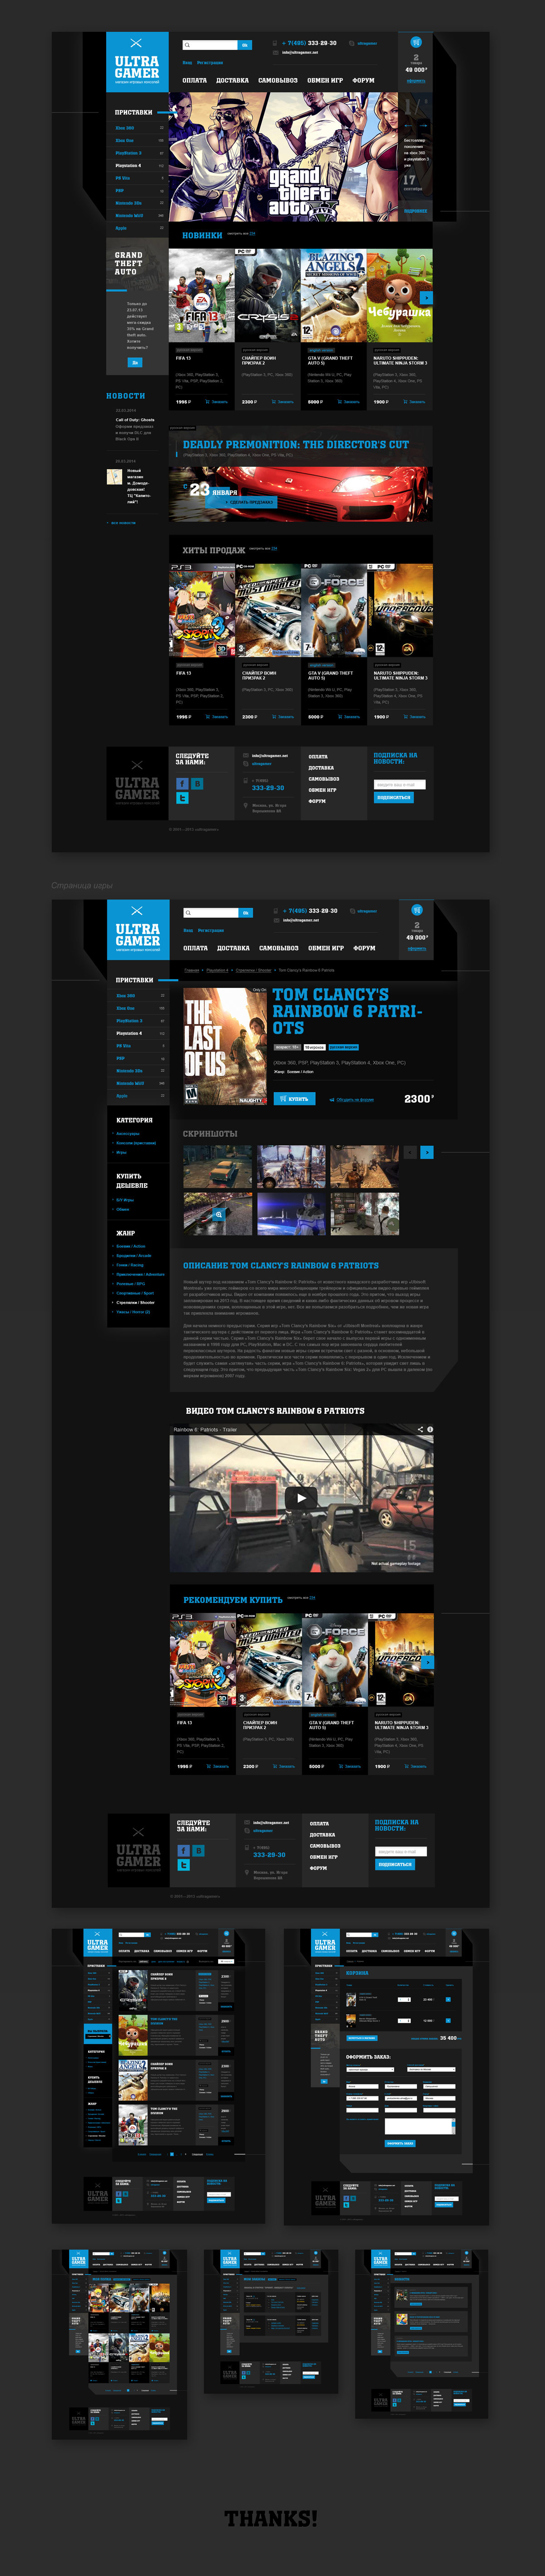 site Website design store Games game shop online shop dark game consoles